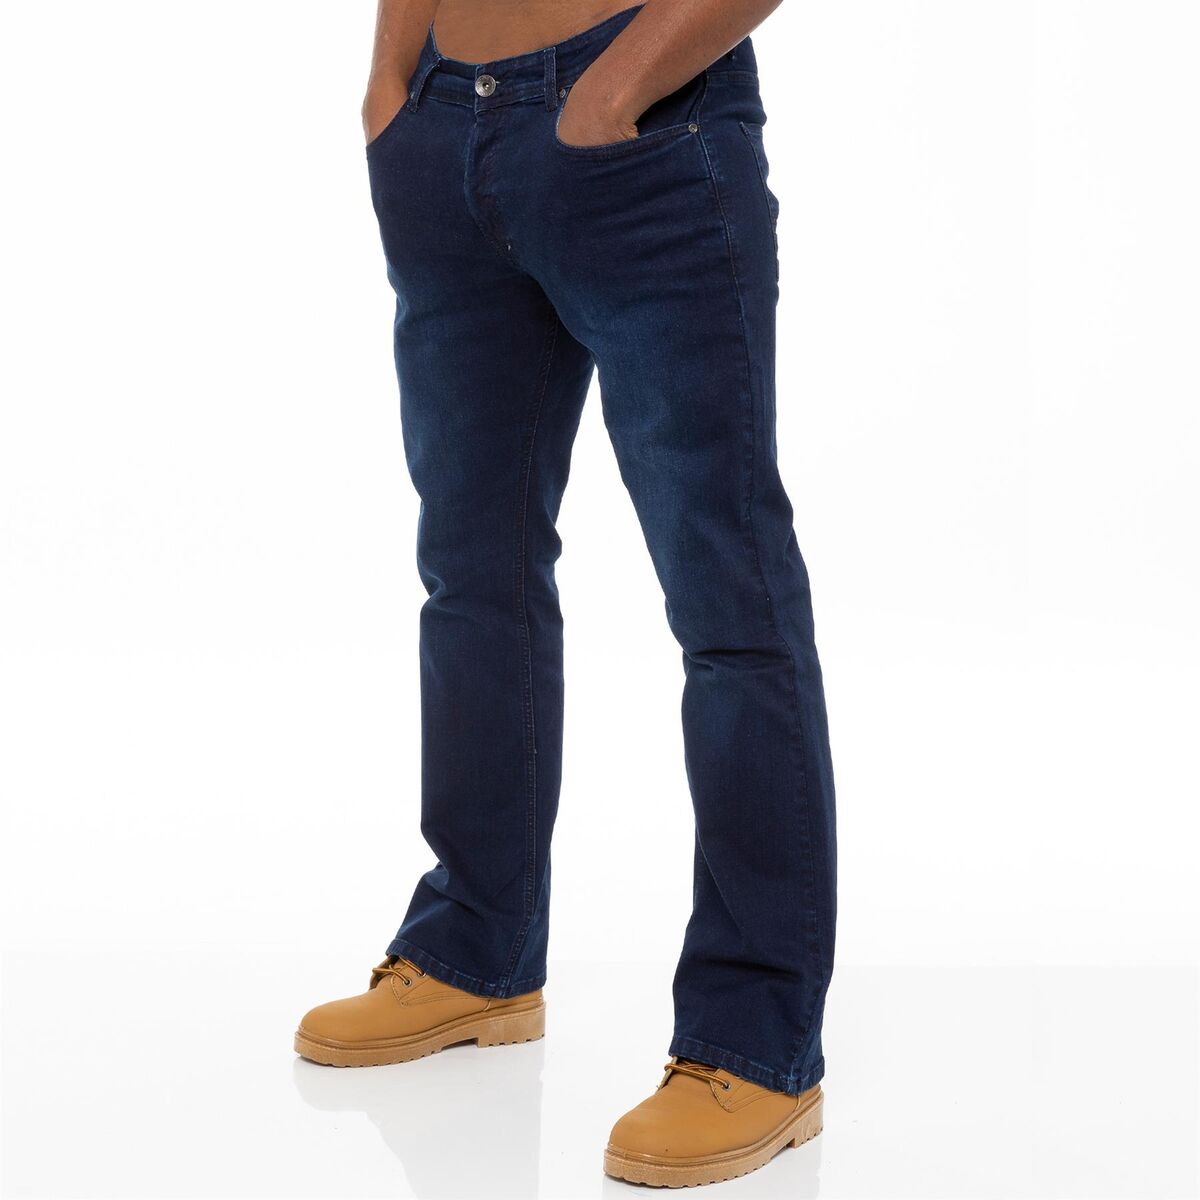 Jeans Stretch Mens | Denim UK Pants Flared Sizes Wide Leg eBay All Trouser Bootcut Enzo